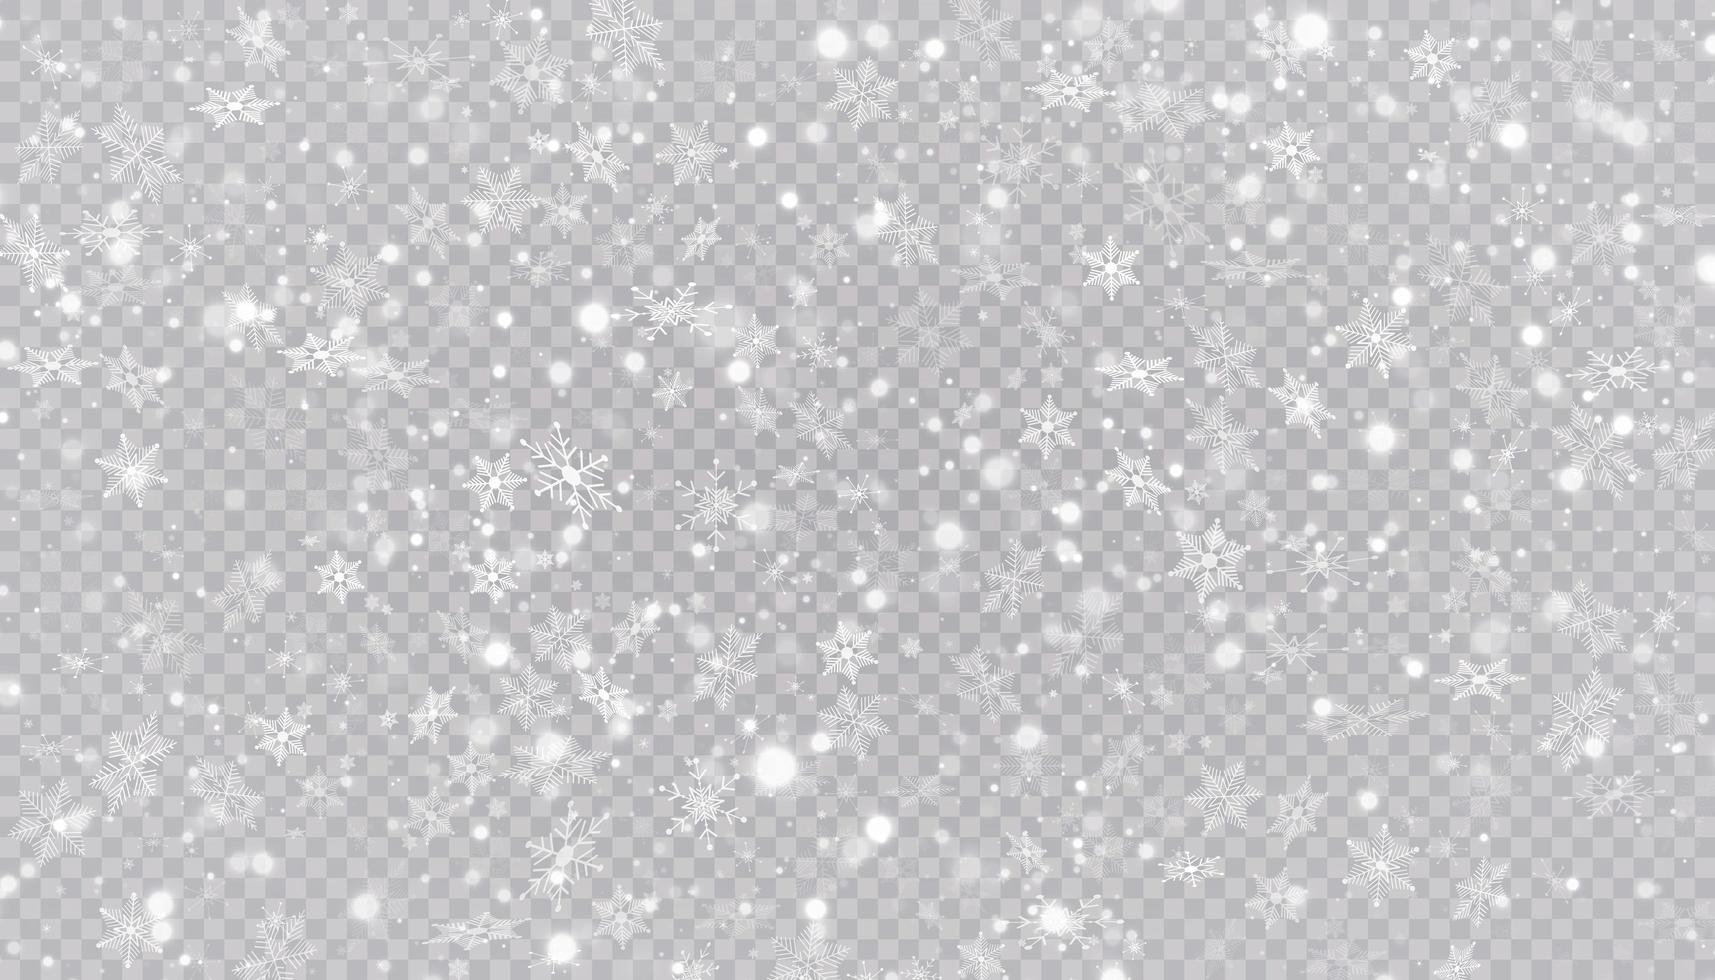 vita snöflingor på en transparent bakgrund. vektor